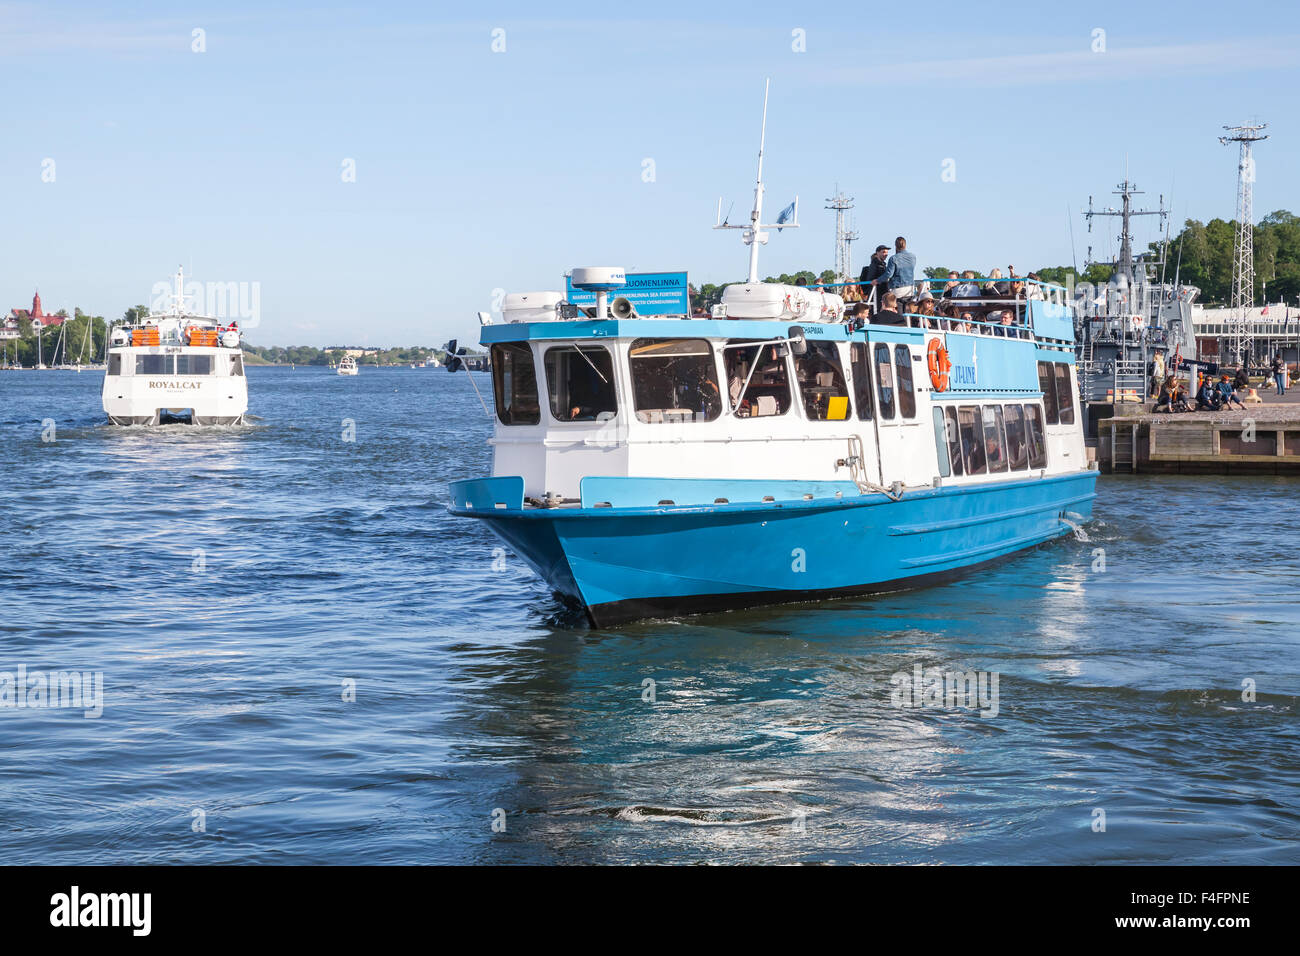 Helsinki, Finland - June 12, 2015: Small passenger ship Chapman operated by JT-Line in port of Helsinki Stock Photo